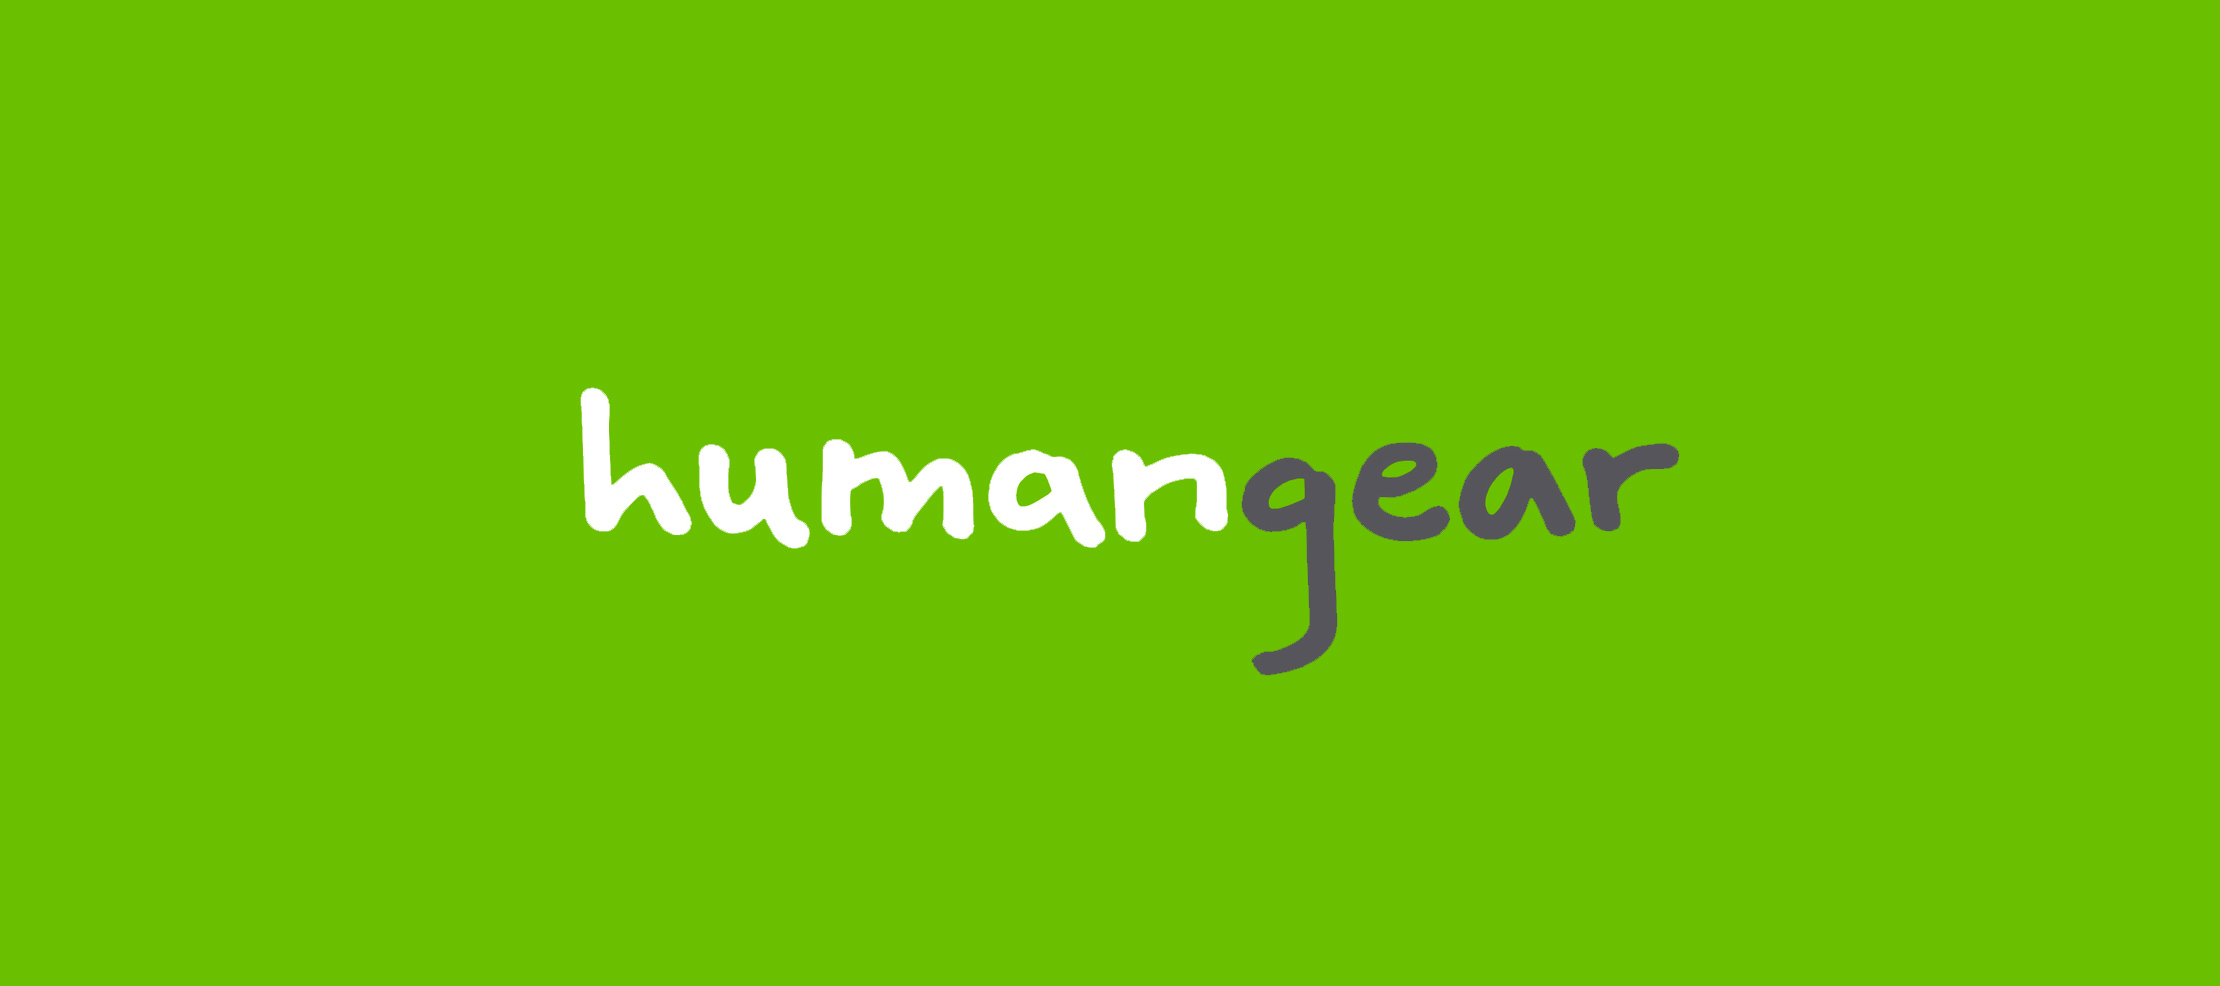 humangear Logo